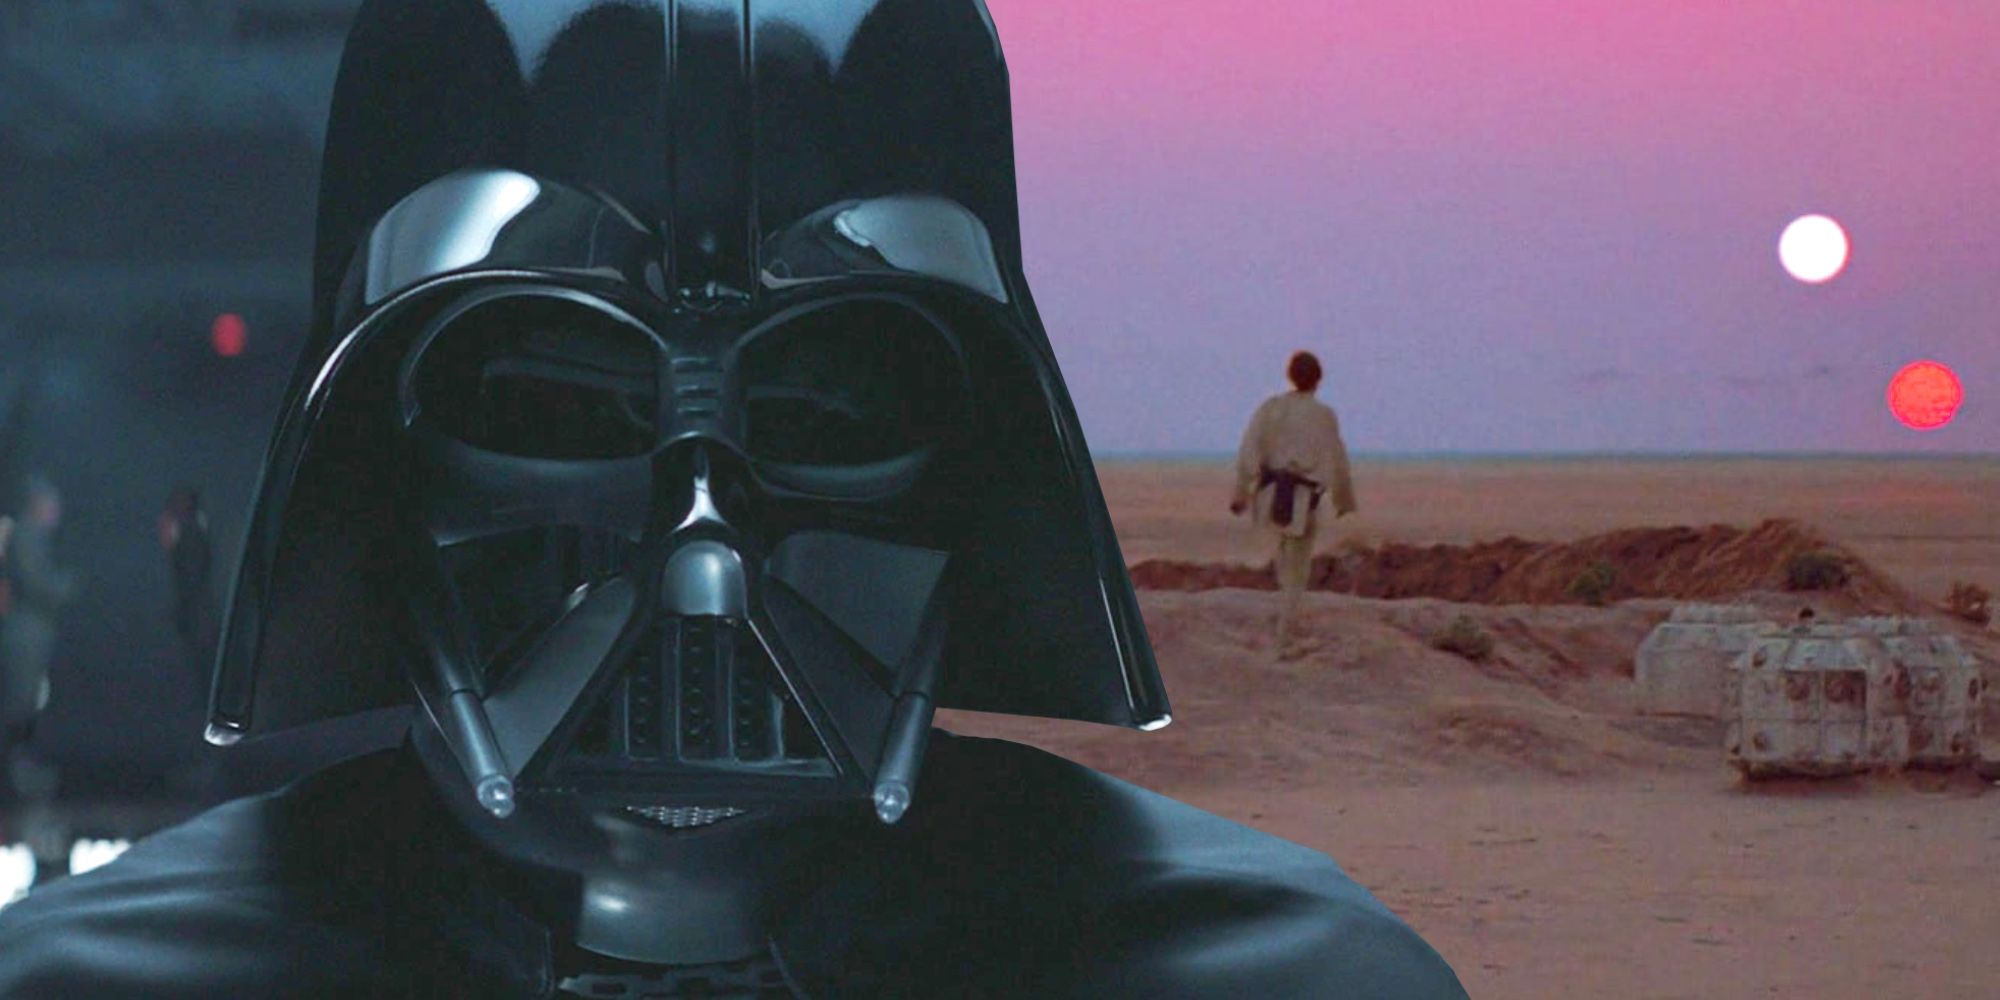 Darth Vader Settles the Fan Debate About Hiding Luke on Tatooine